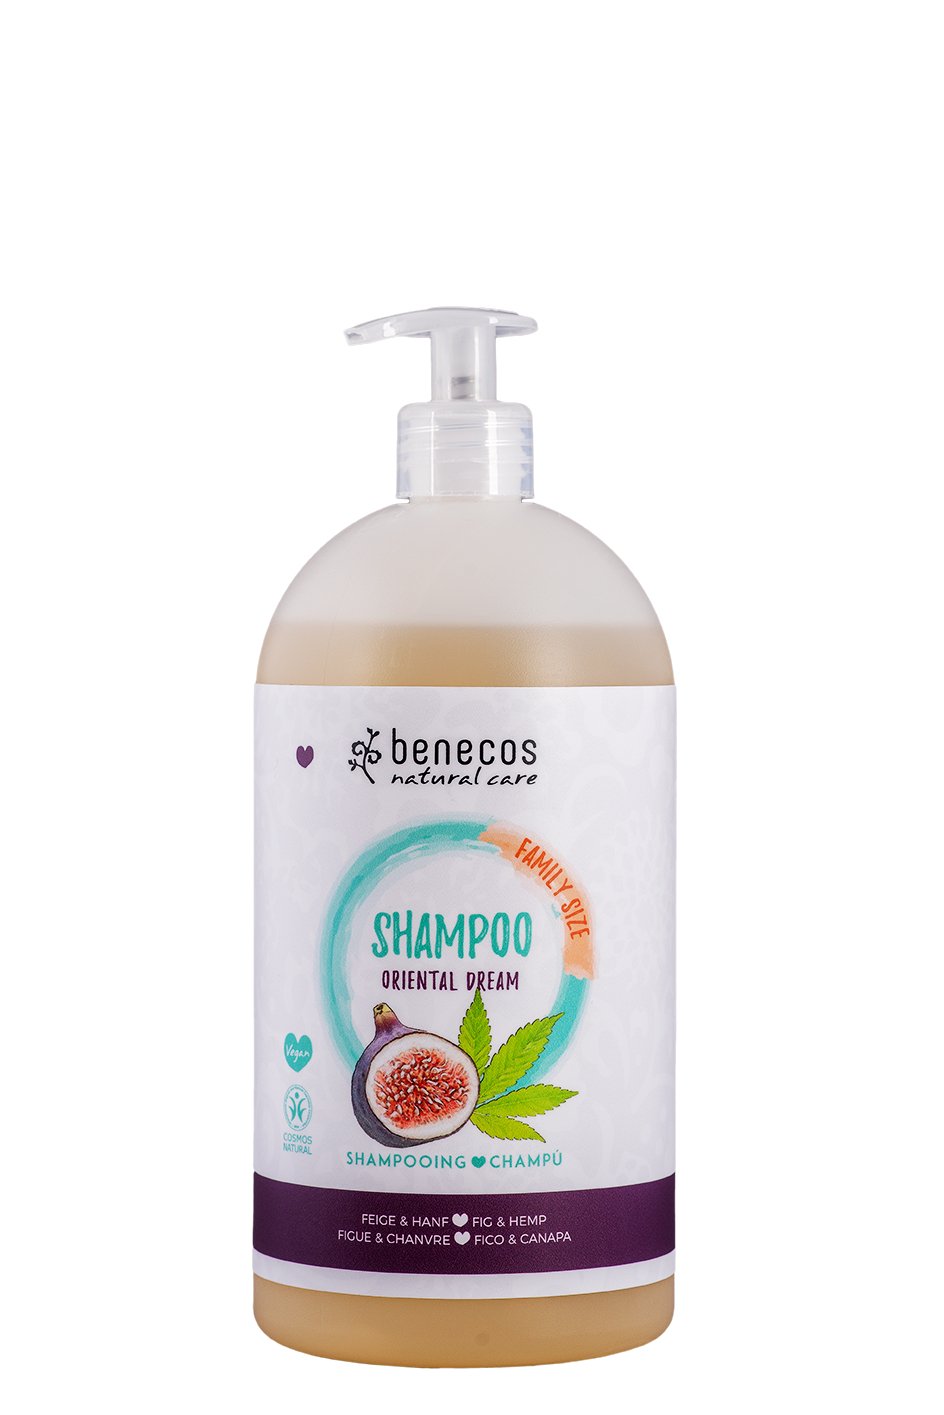 Benecos Shampoo Family Size 950ml - Feige & Hanf - Familienbande